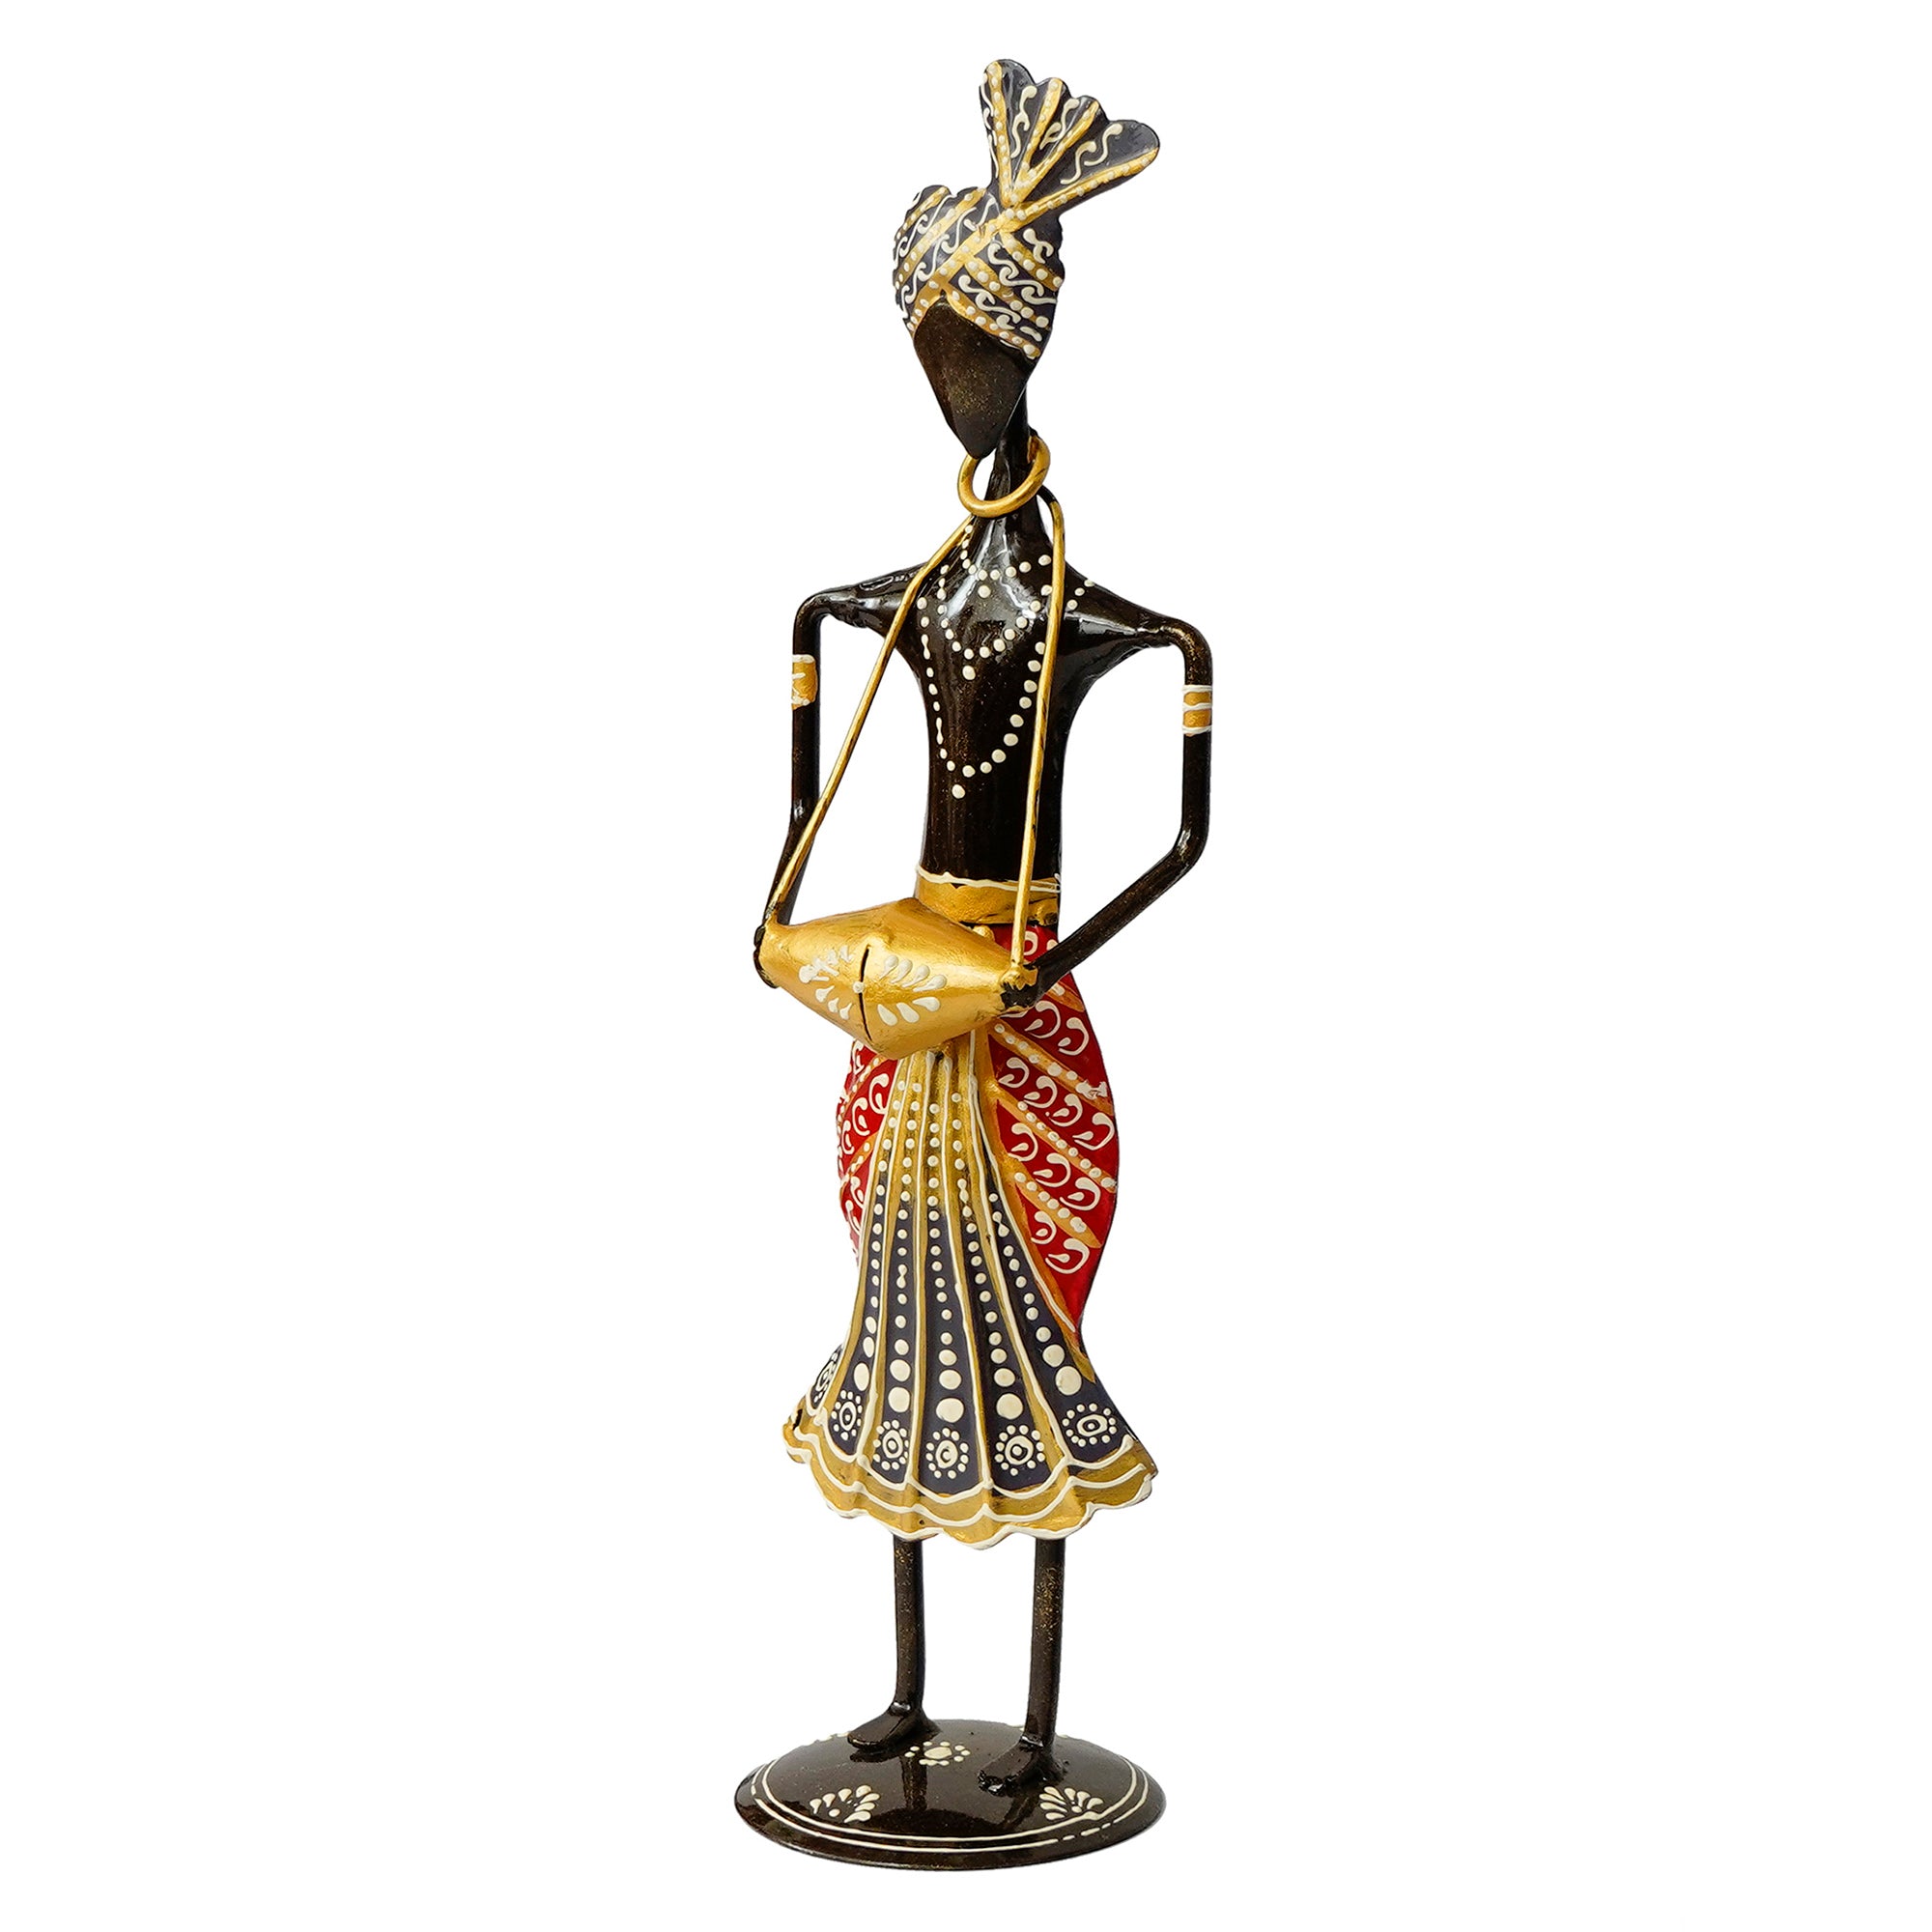 Iron Tribal Man Figurine Playing Banjo Musical Instrument Decorative Showpiece (Black, Green and Orange) 4